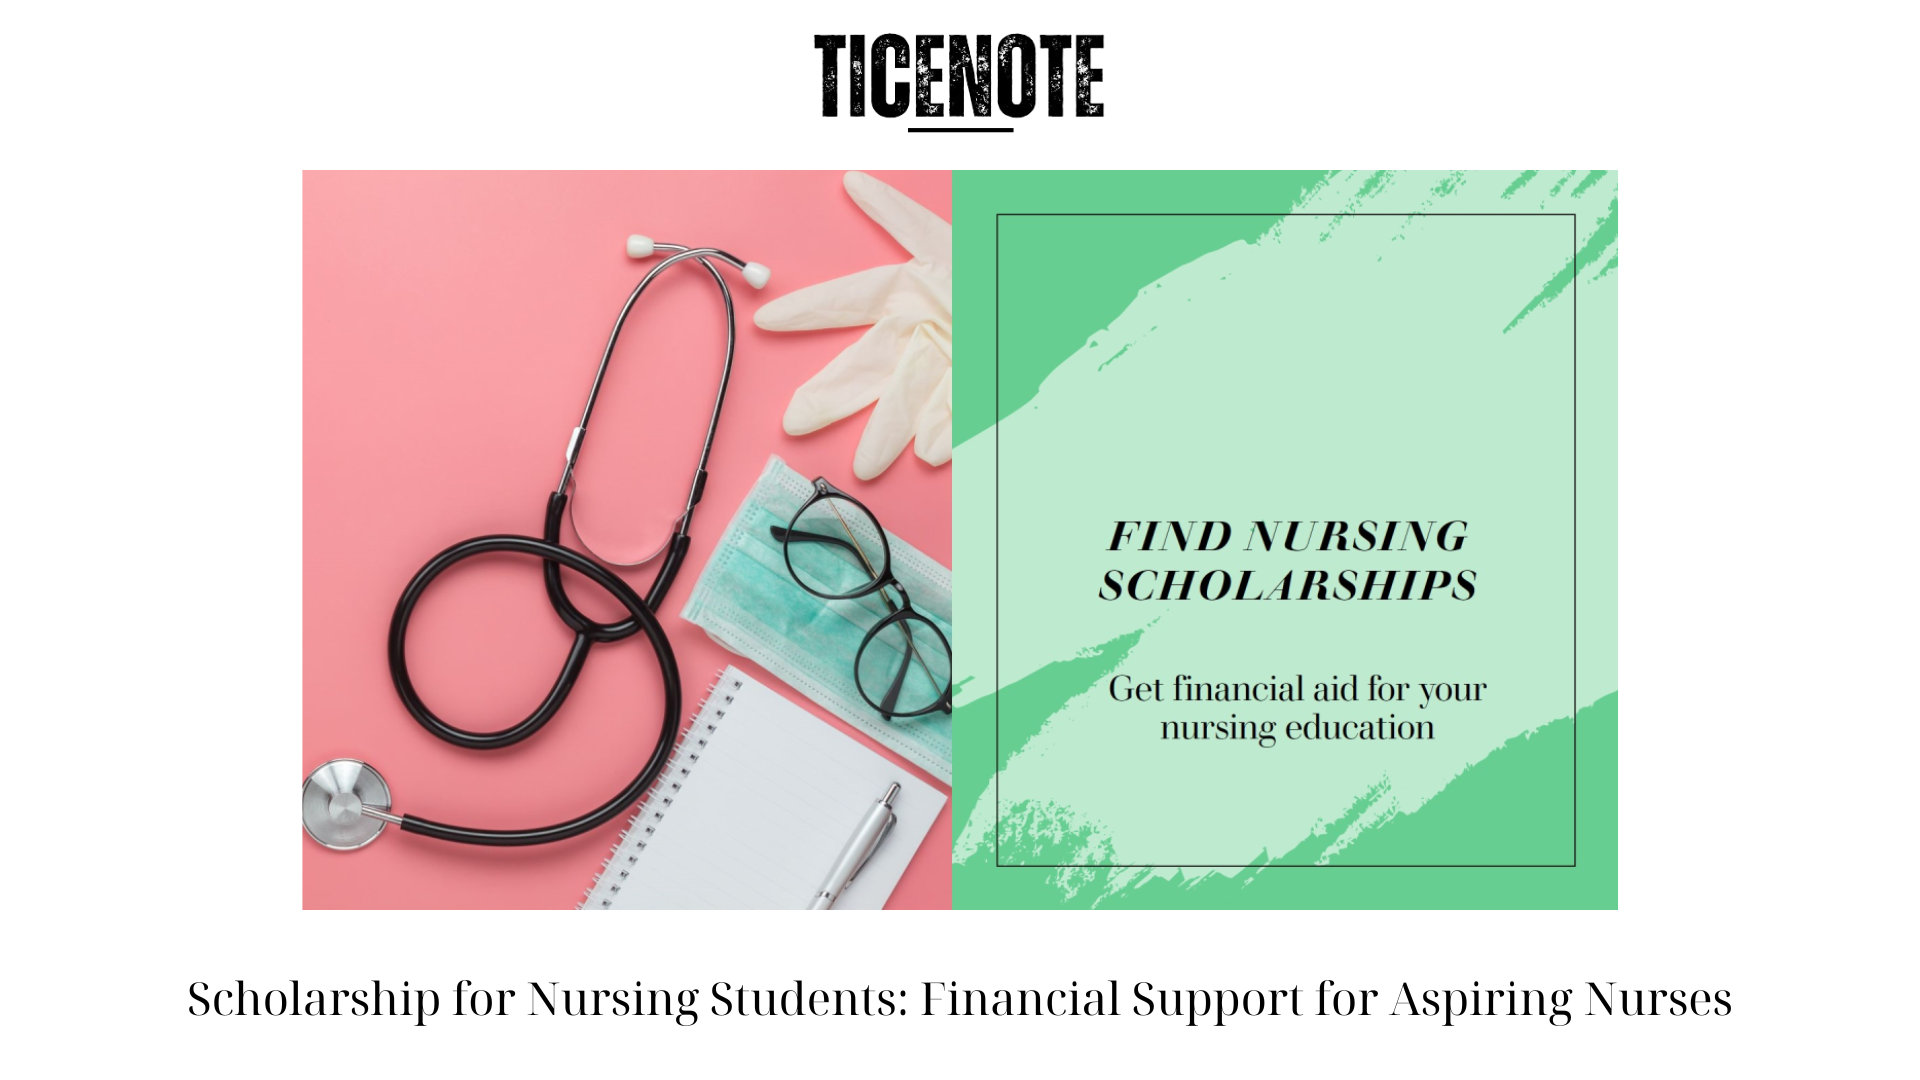 Scholarship for Nursing Students: Financial Support for Aspiring Nurses